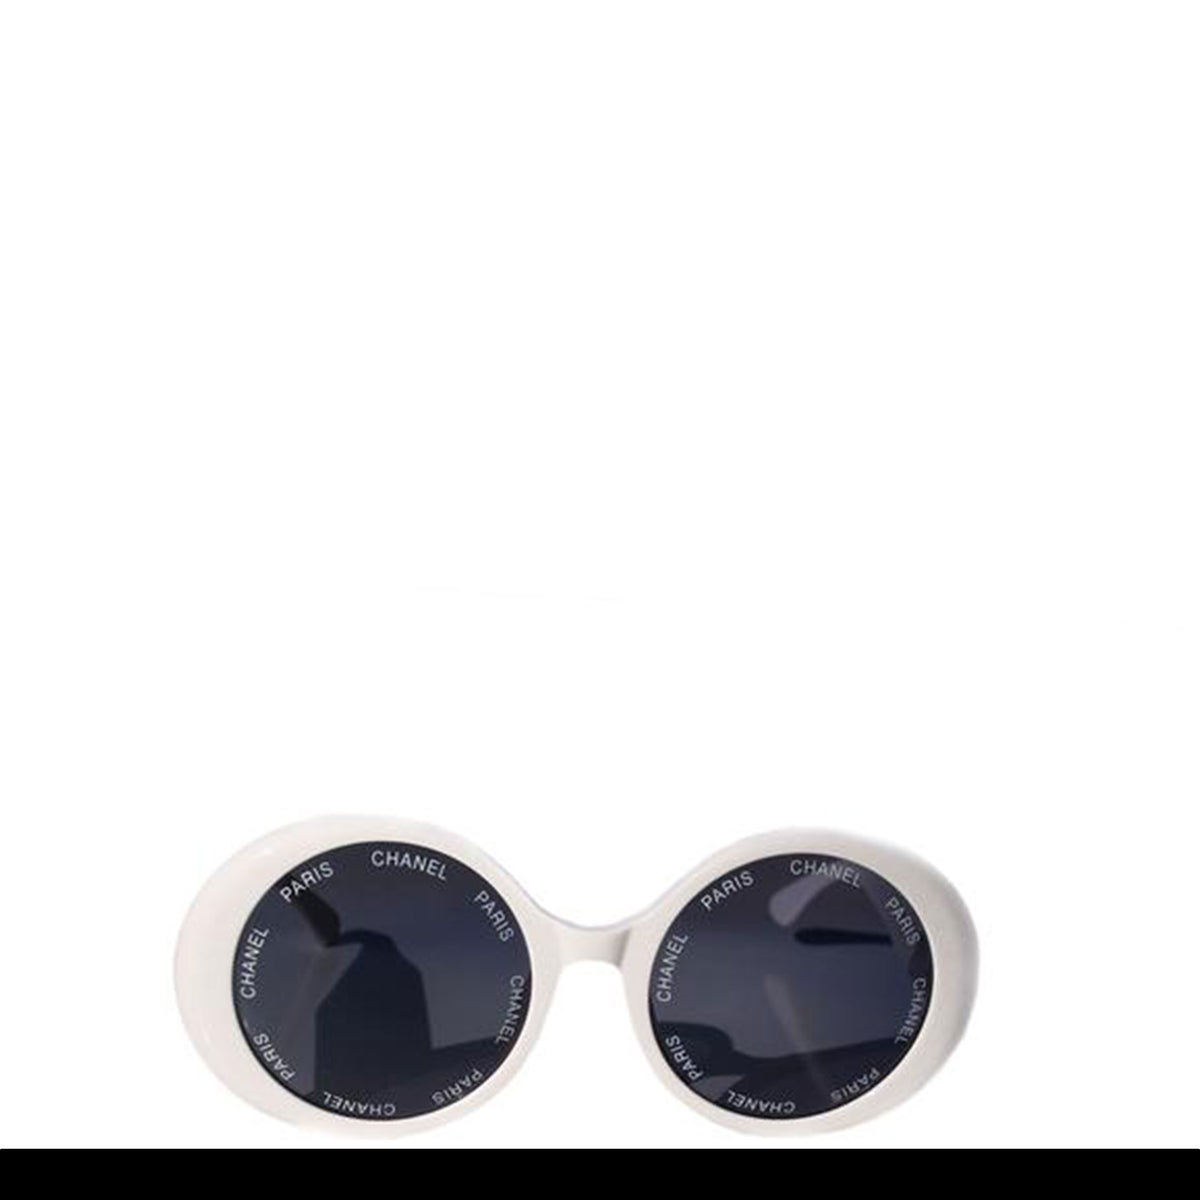 Vintage Chanel 01945 10601 Sunglasses